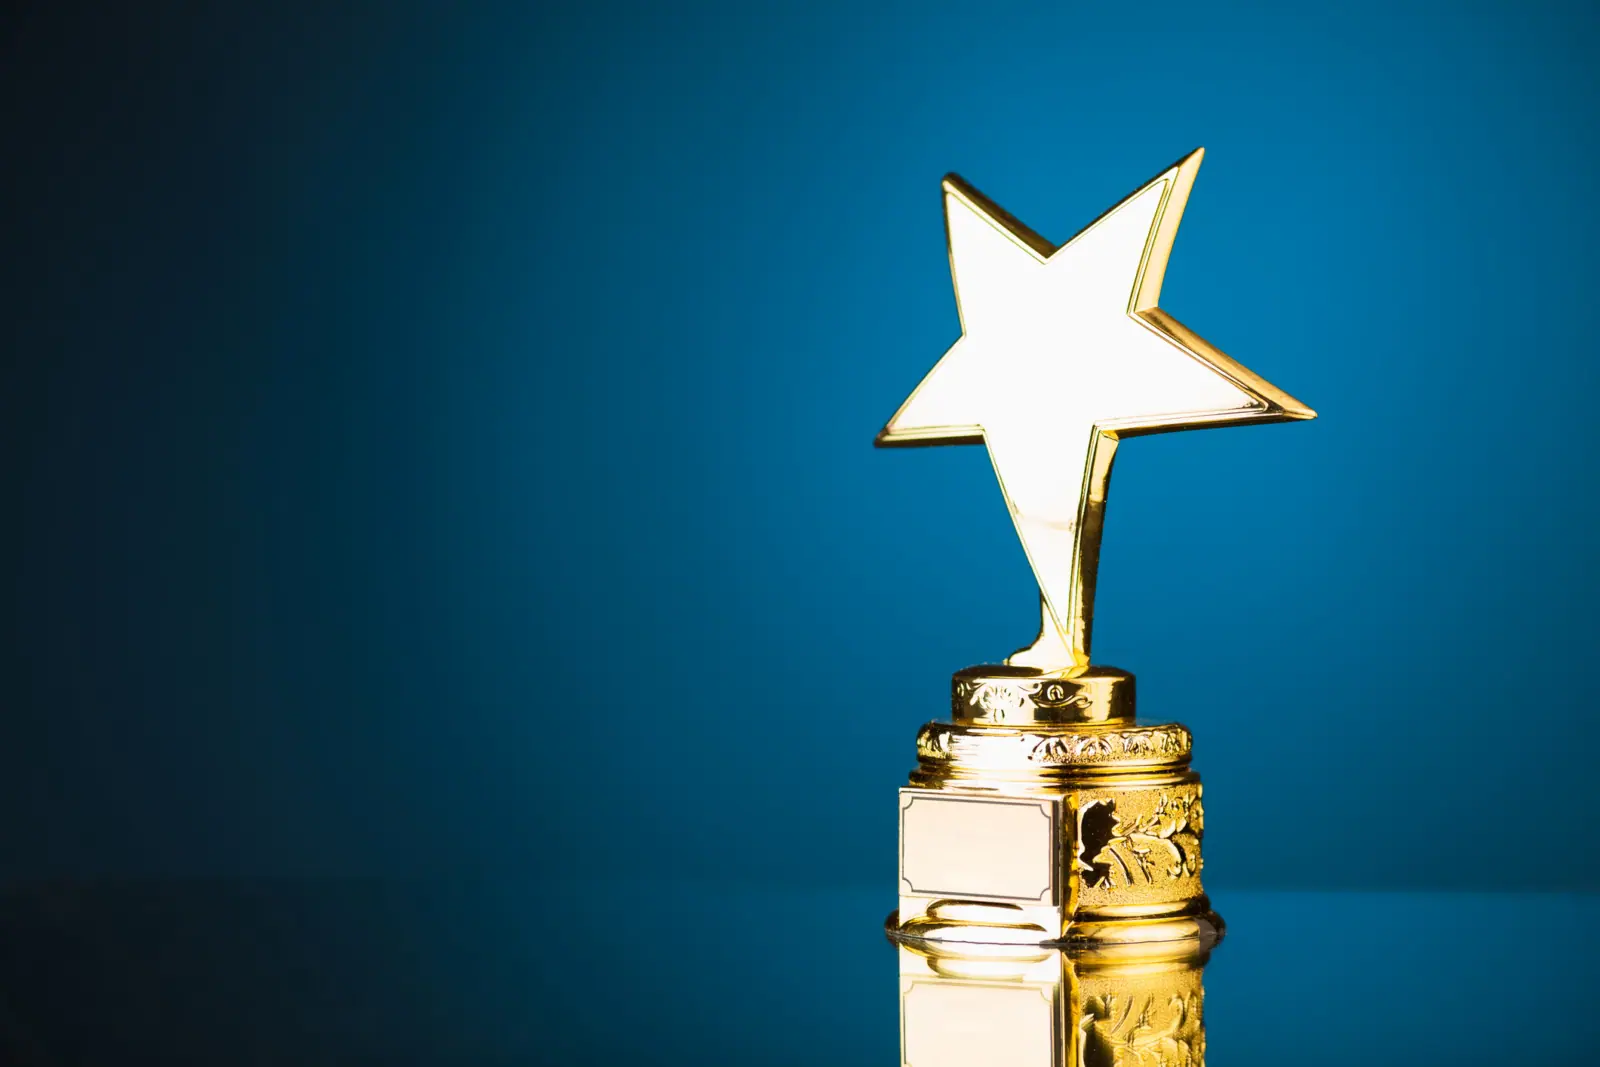 JazzHR Wins ADP 2019 Rising Star Award